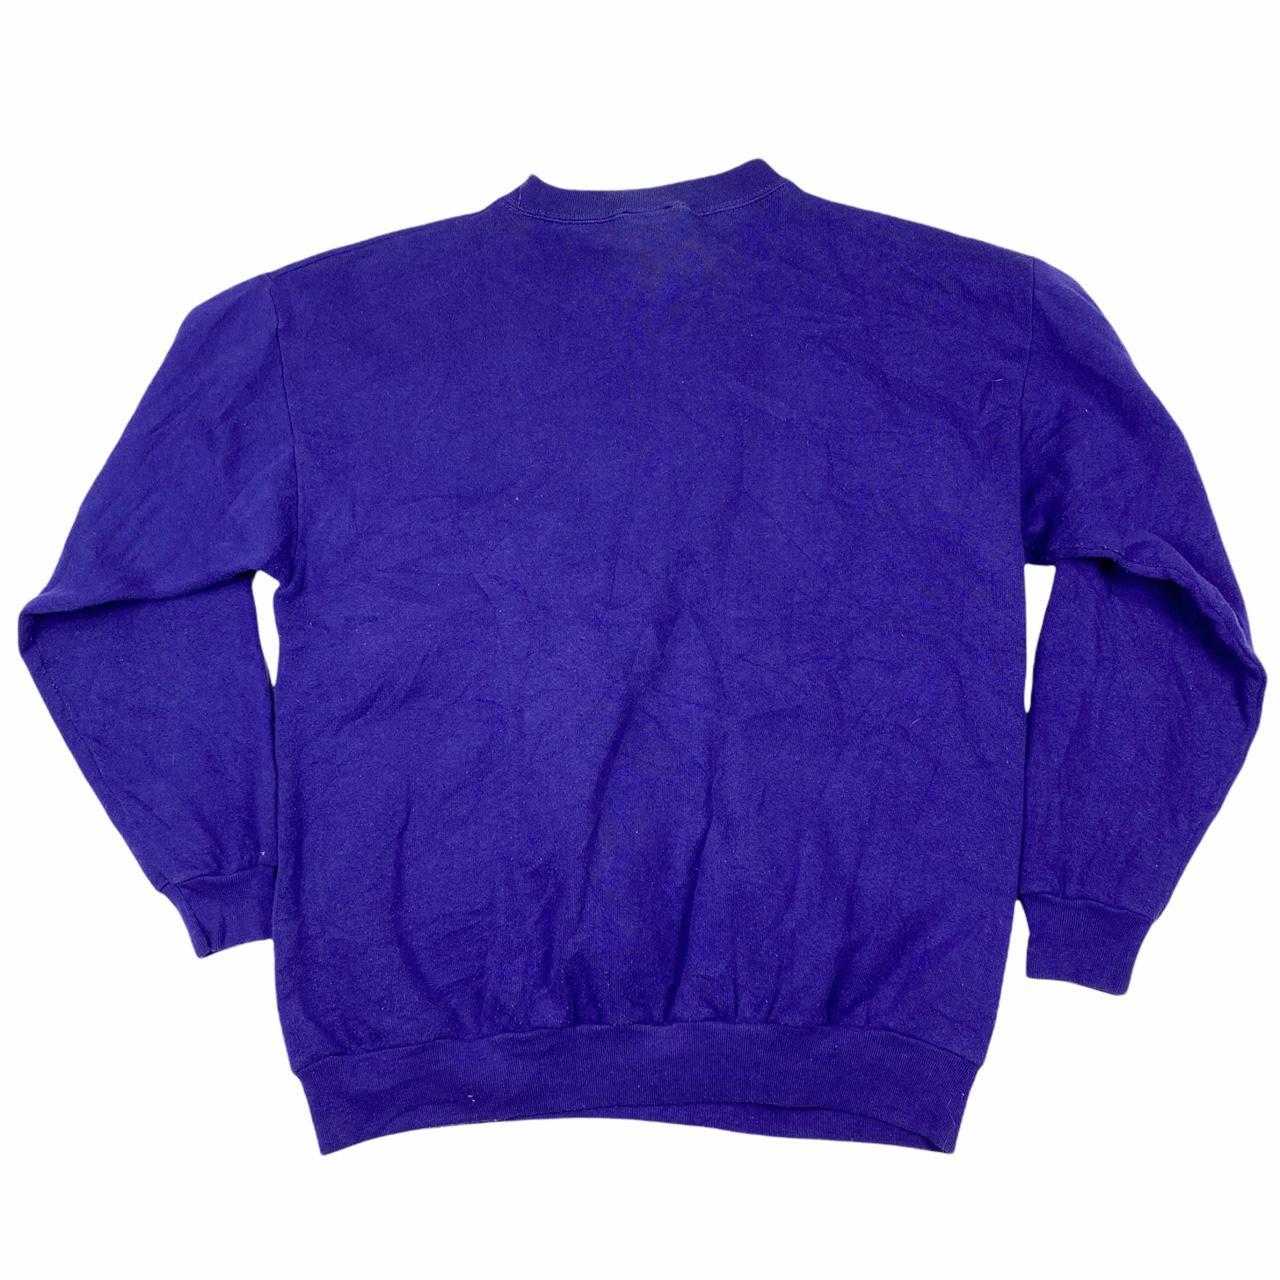 Product Image 2 - Vintage Disney sweatshirt. 
Winnie the